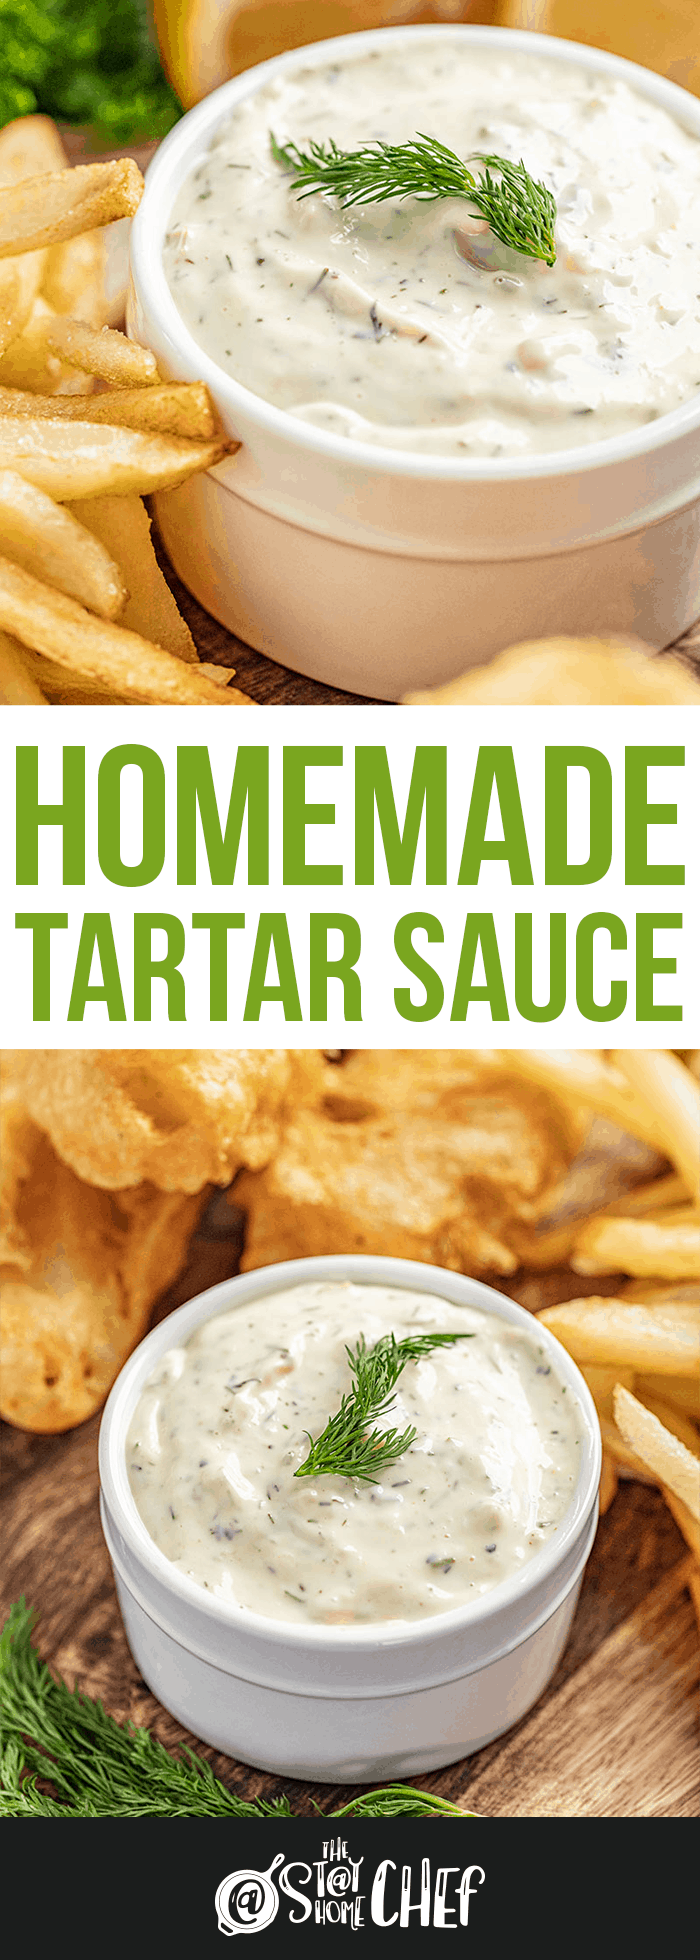 Homemade Tartar Sauce